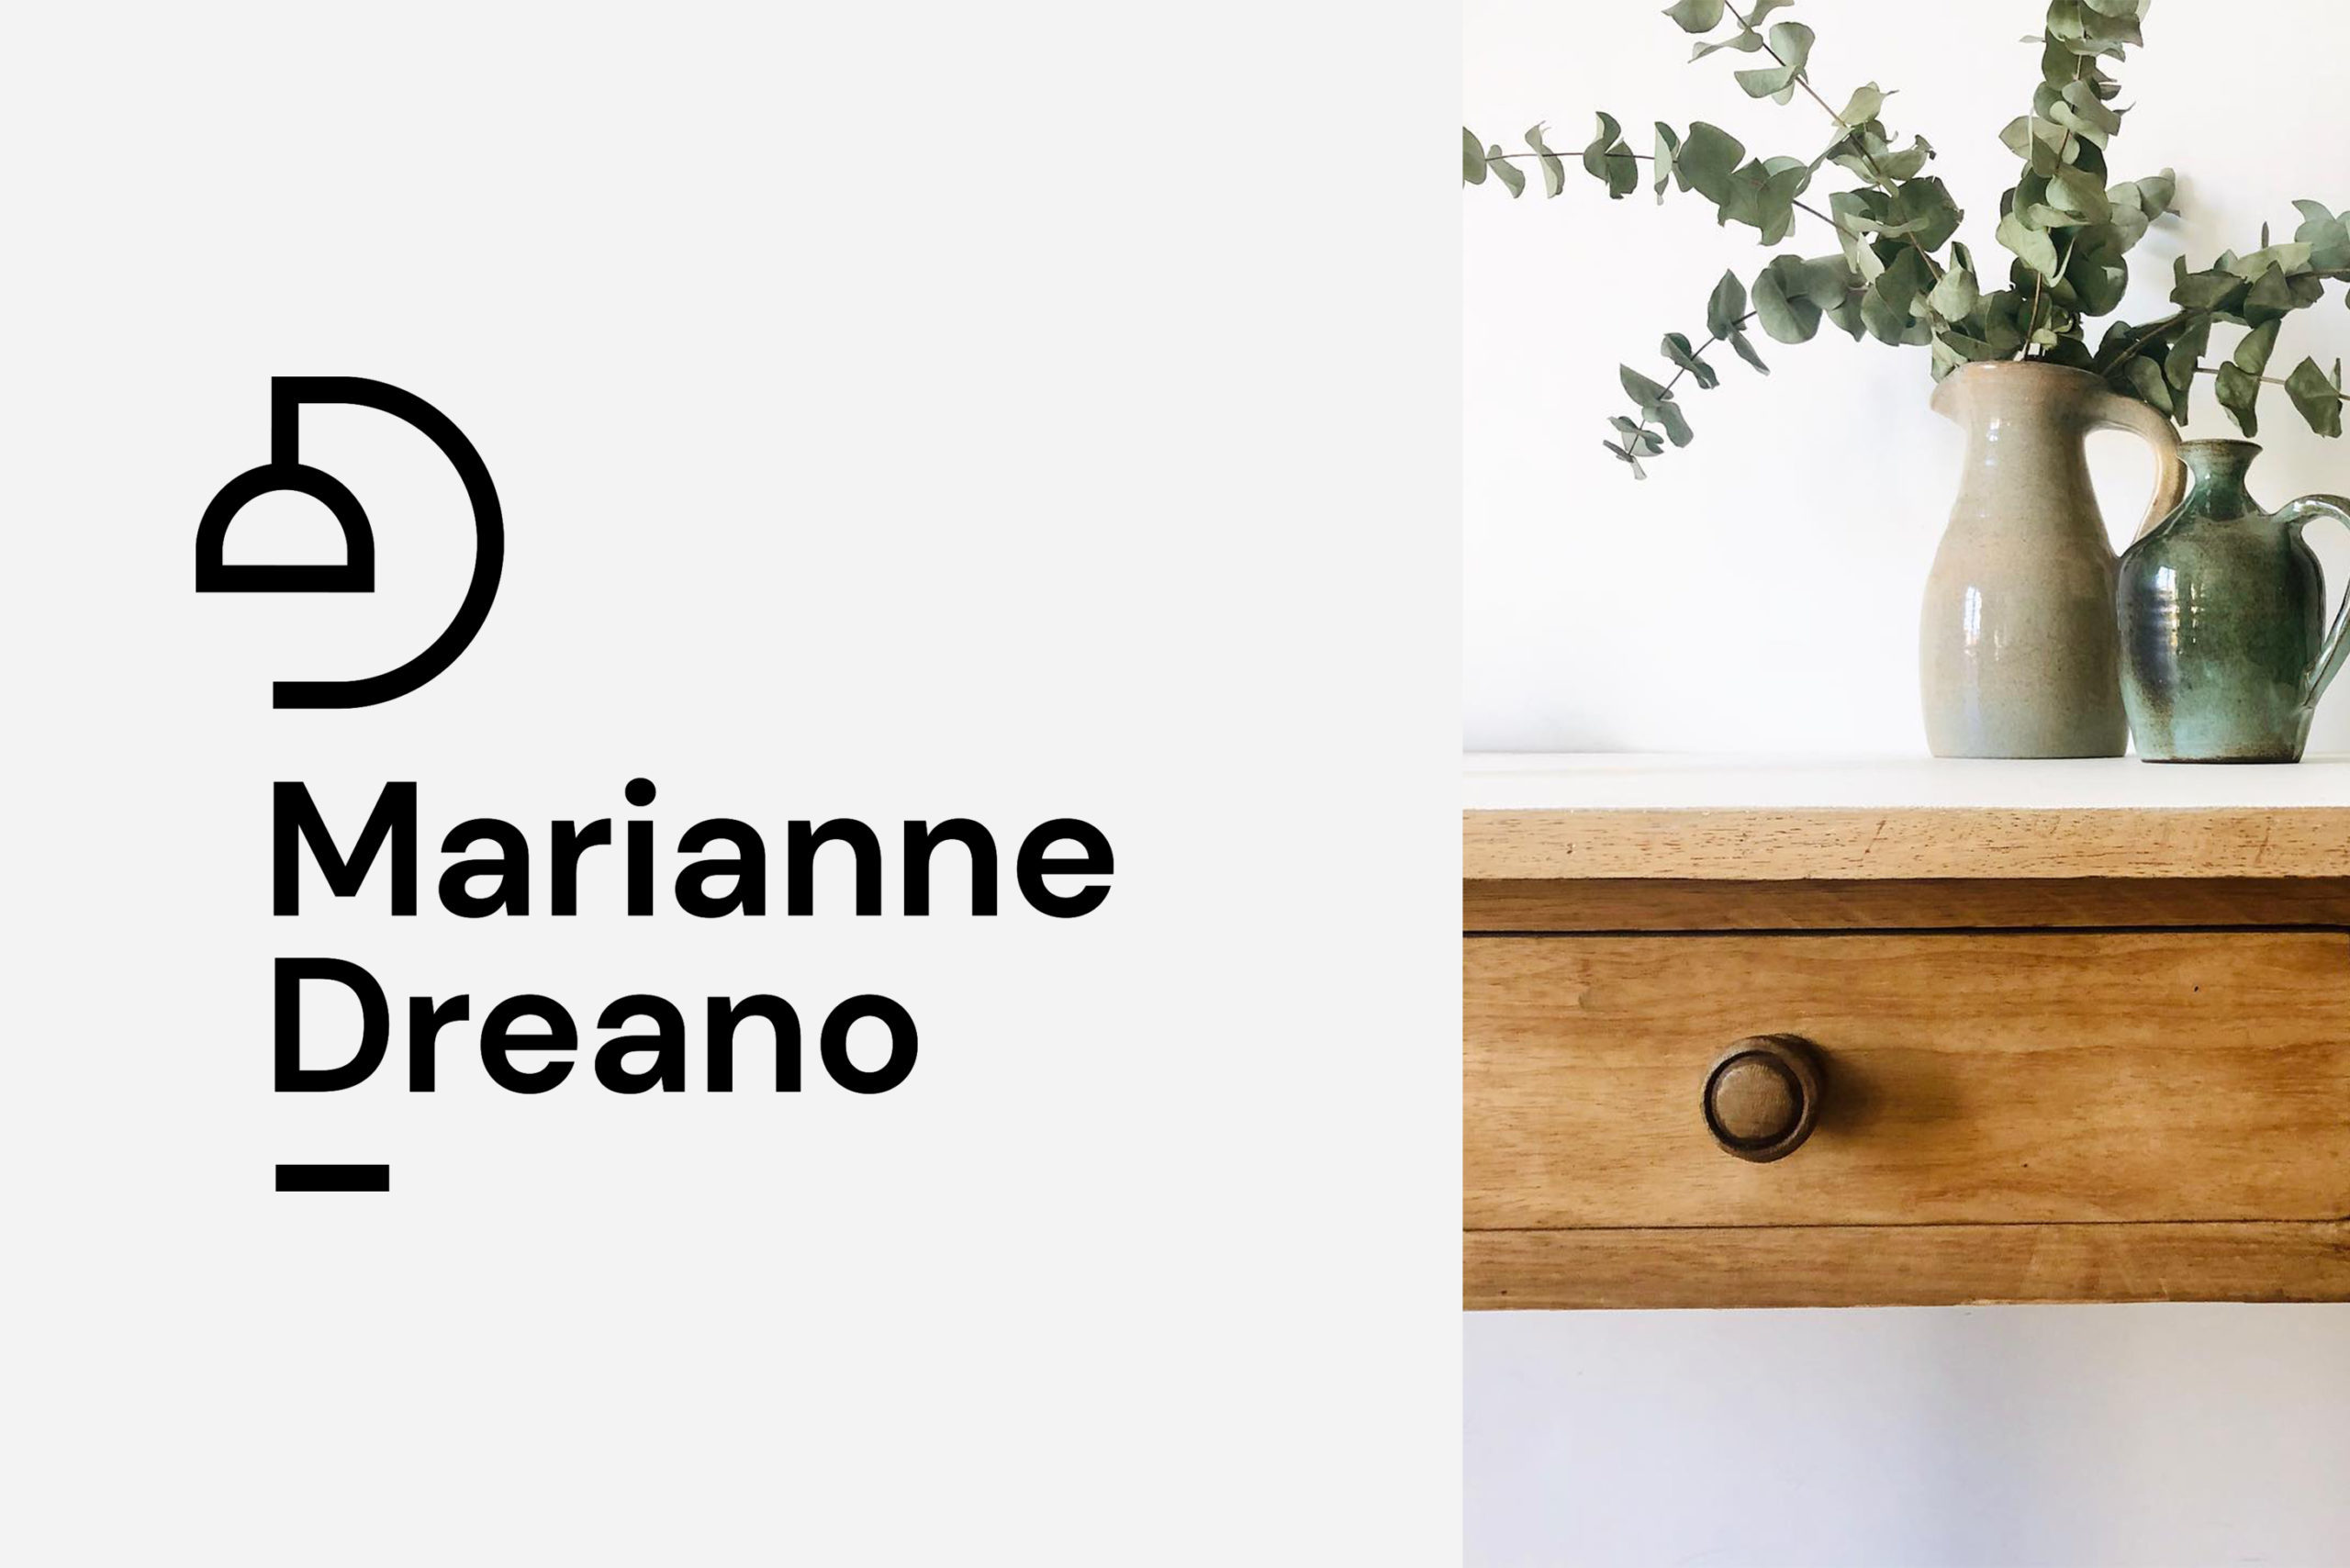 Marianne Dreano